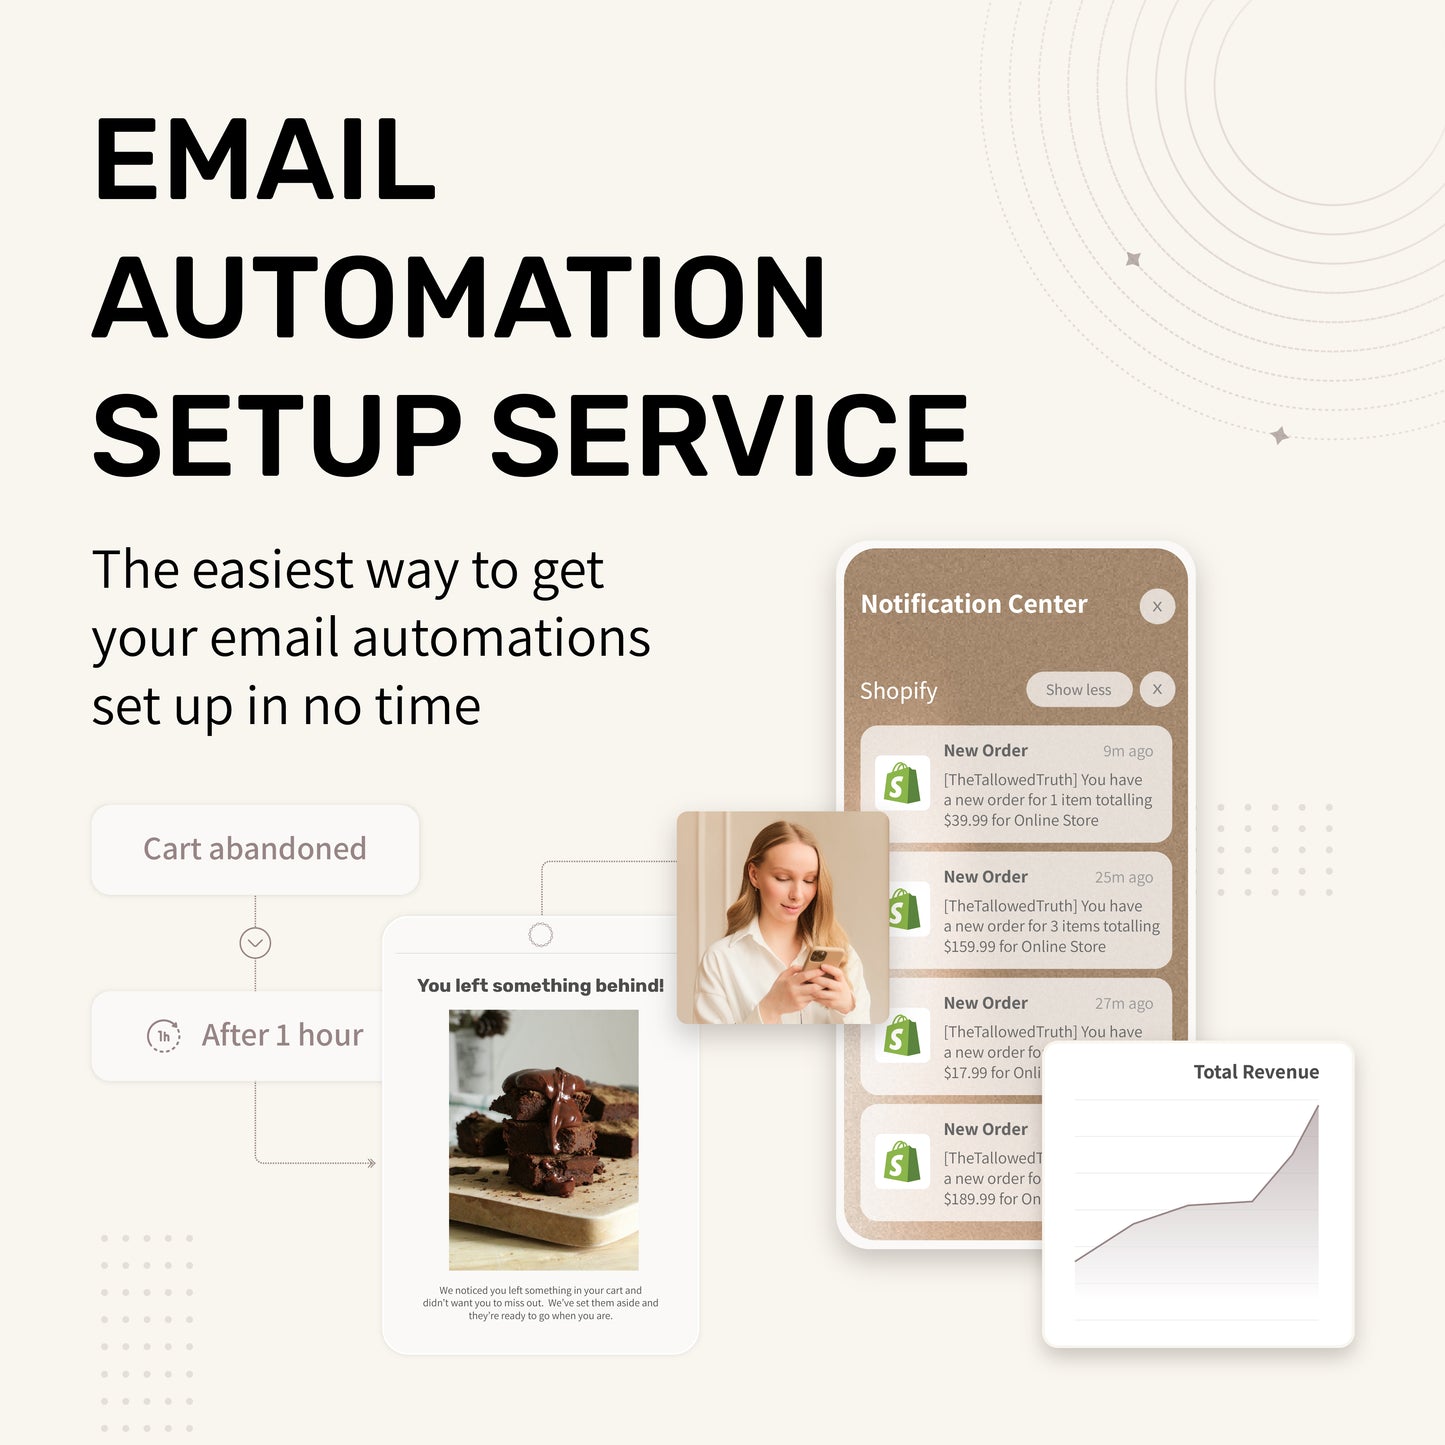 Email Automation Setup Service